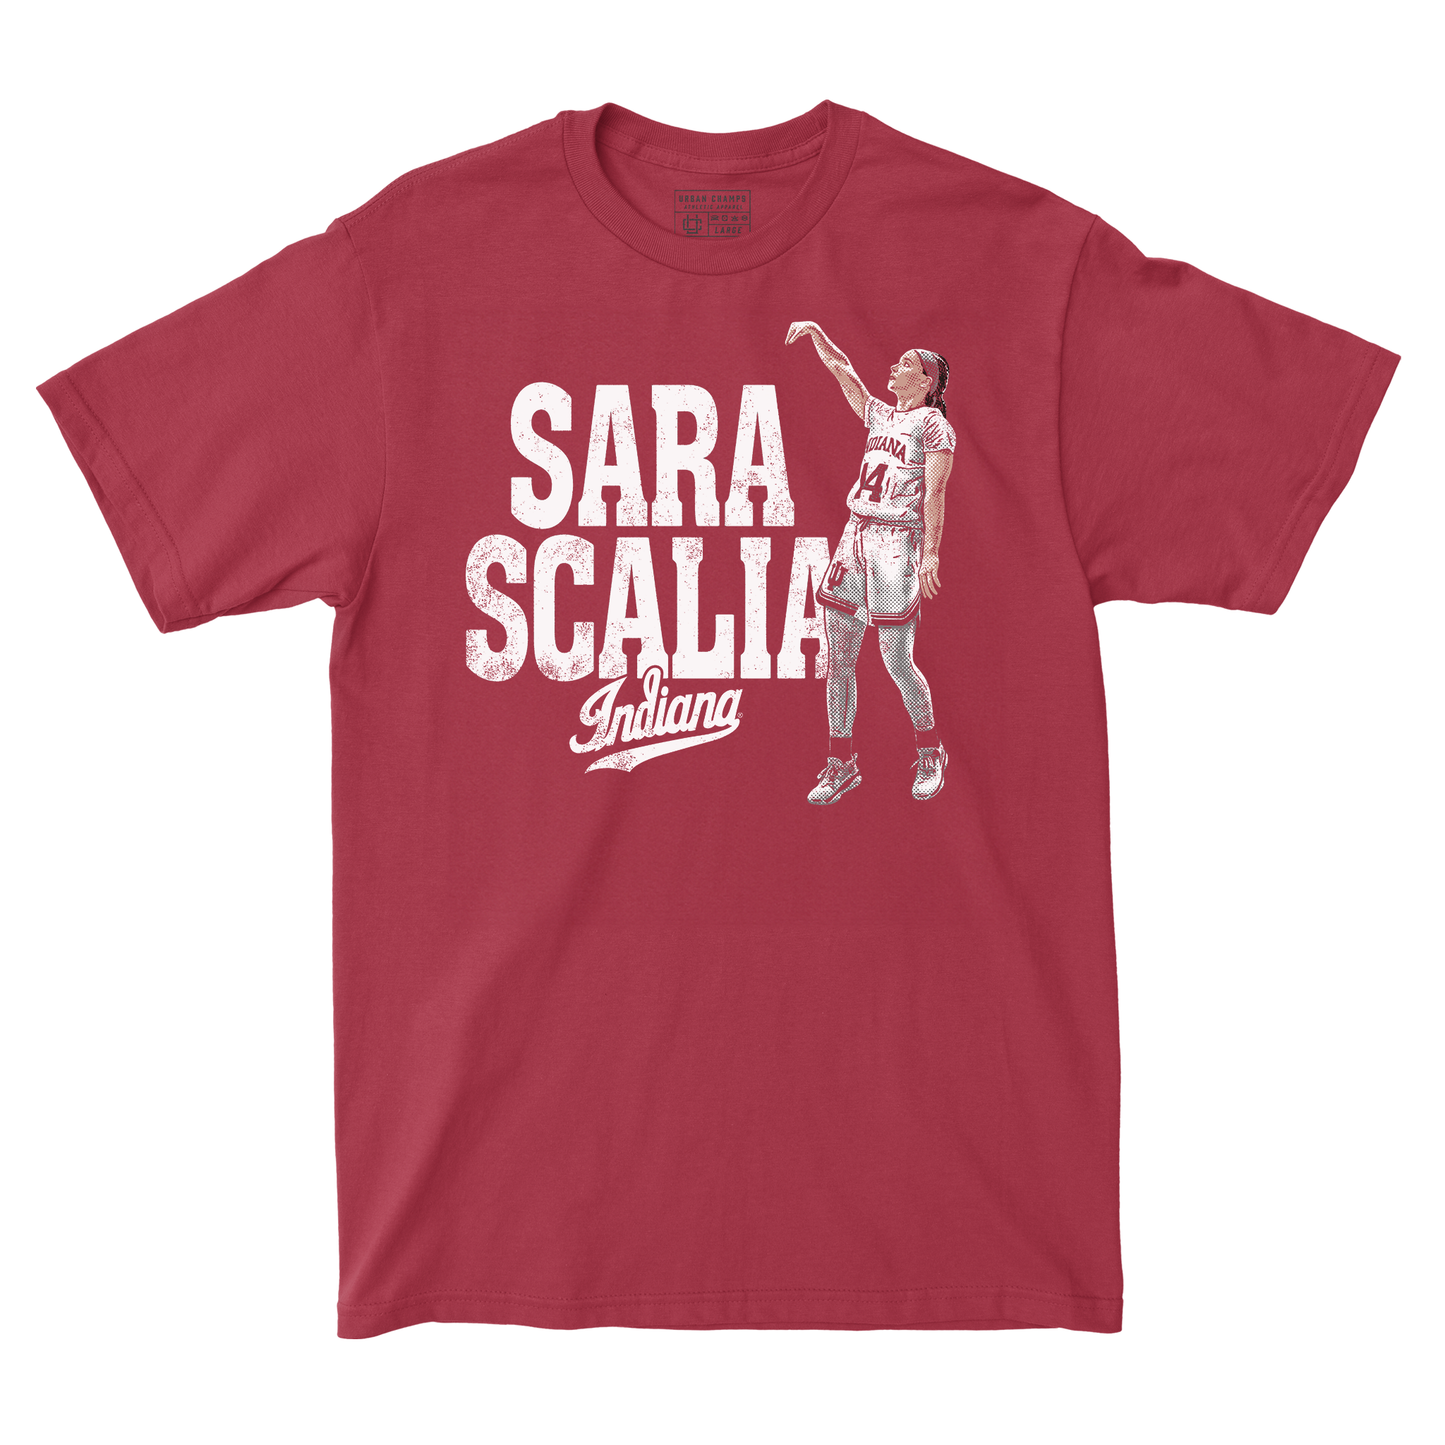 EXCLUSIVE RELEASE: Sara Scalia 'Swish' Tee